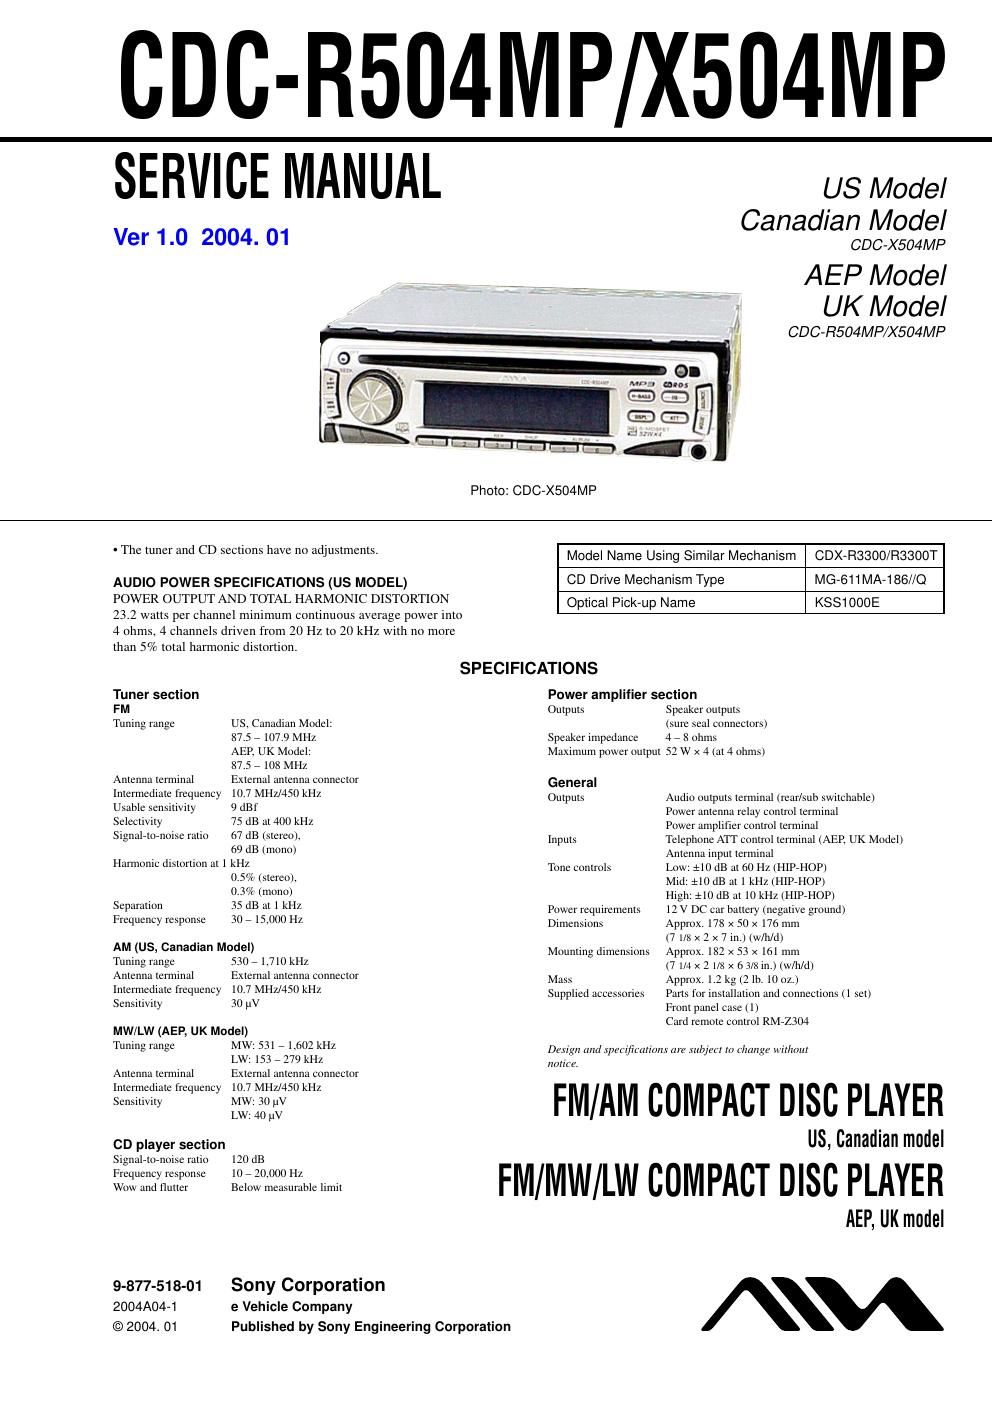 sony cdc r 504 mp service manual